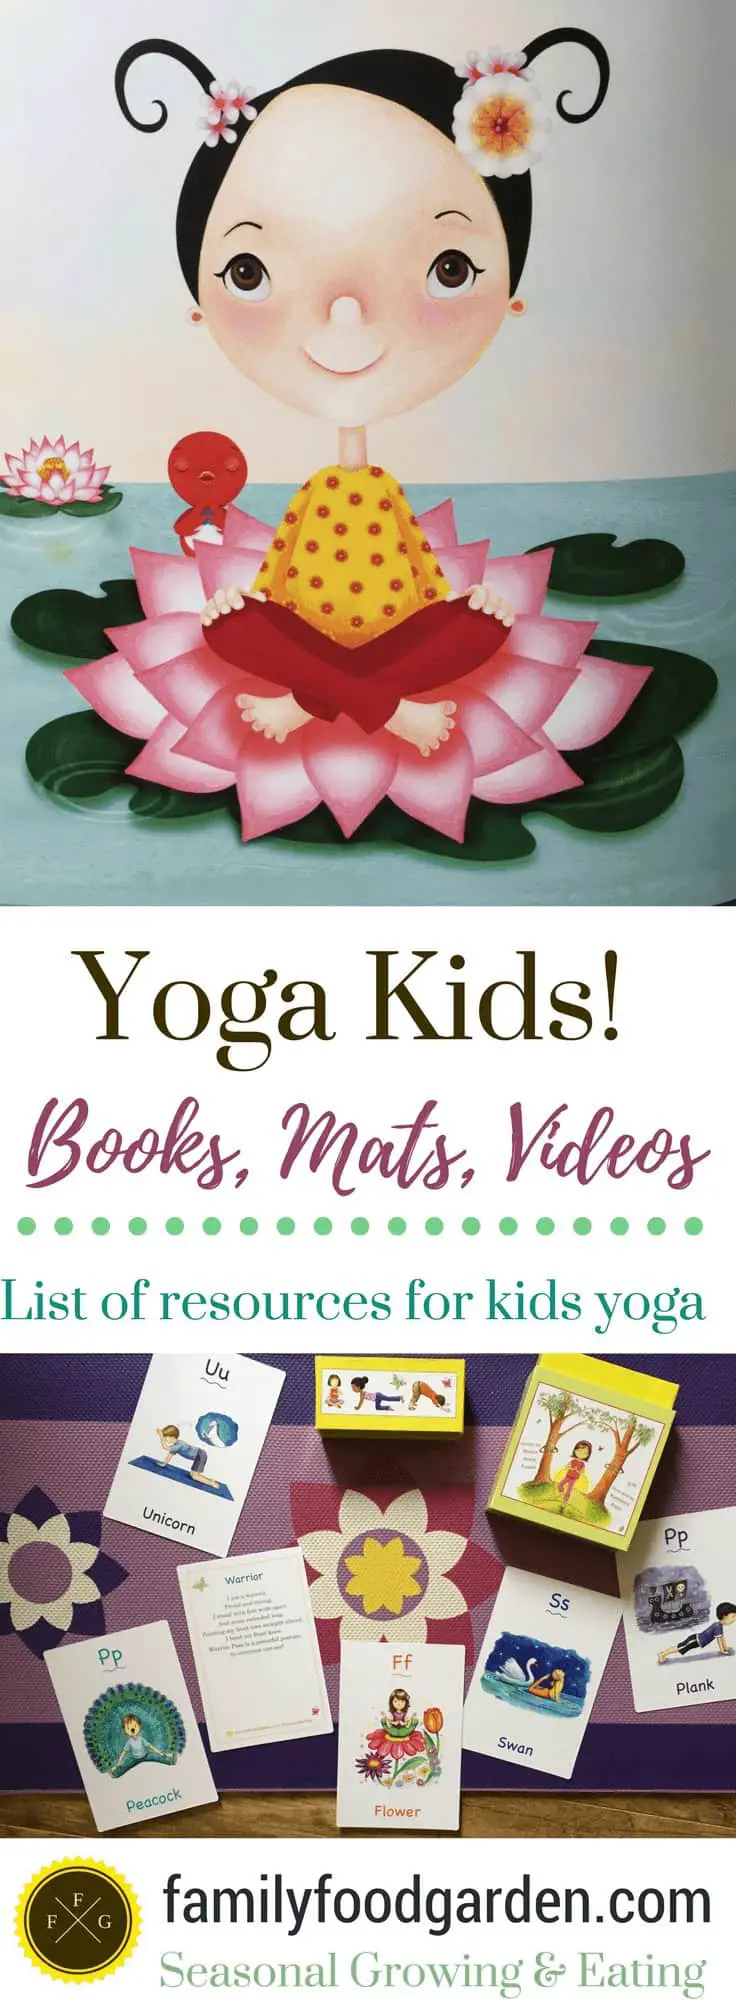 Yoga Kids - Online Yoga Videos, Books & Yoga Mats